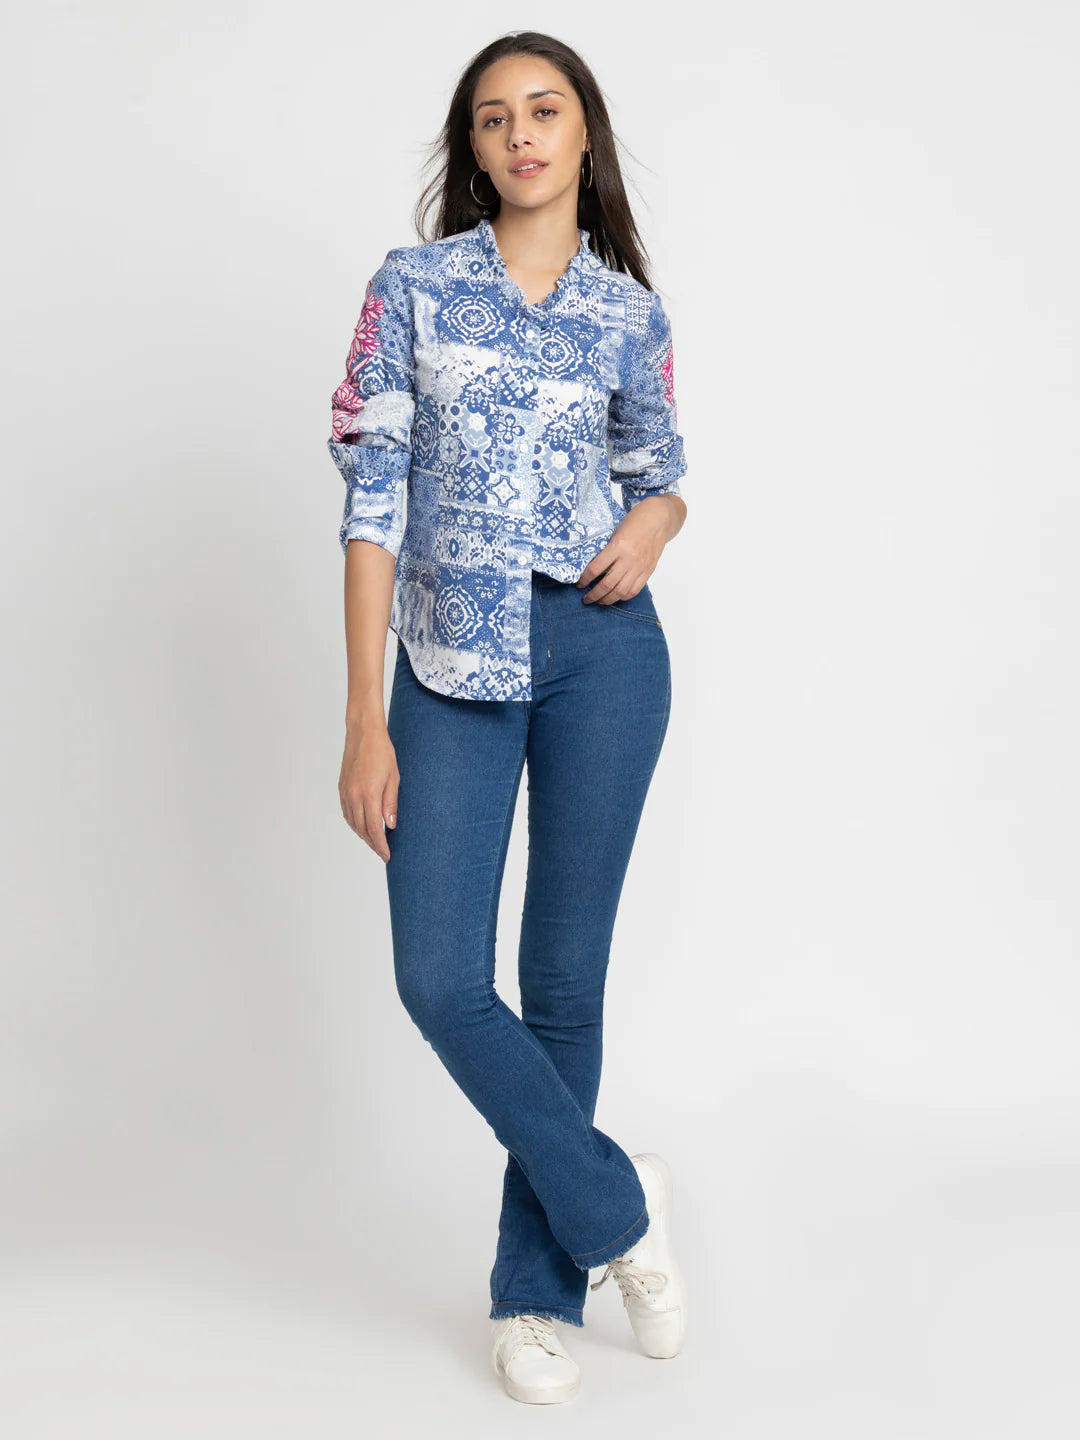 Blue Cotton Shirt for Women | Chic Blue Printed Cotton Shirt